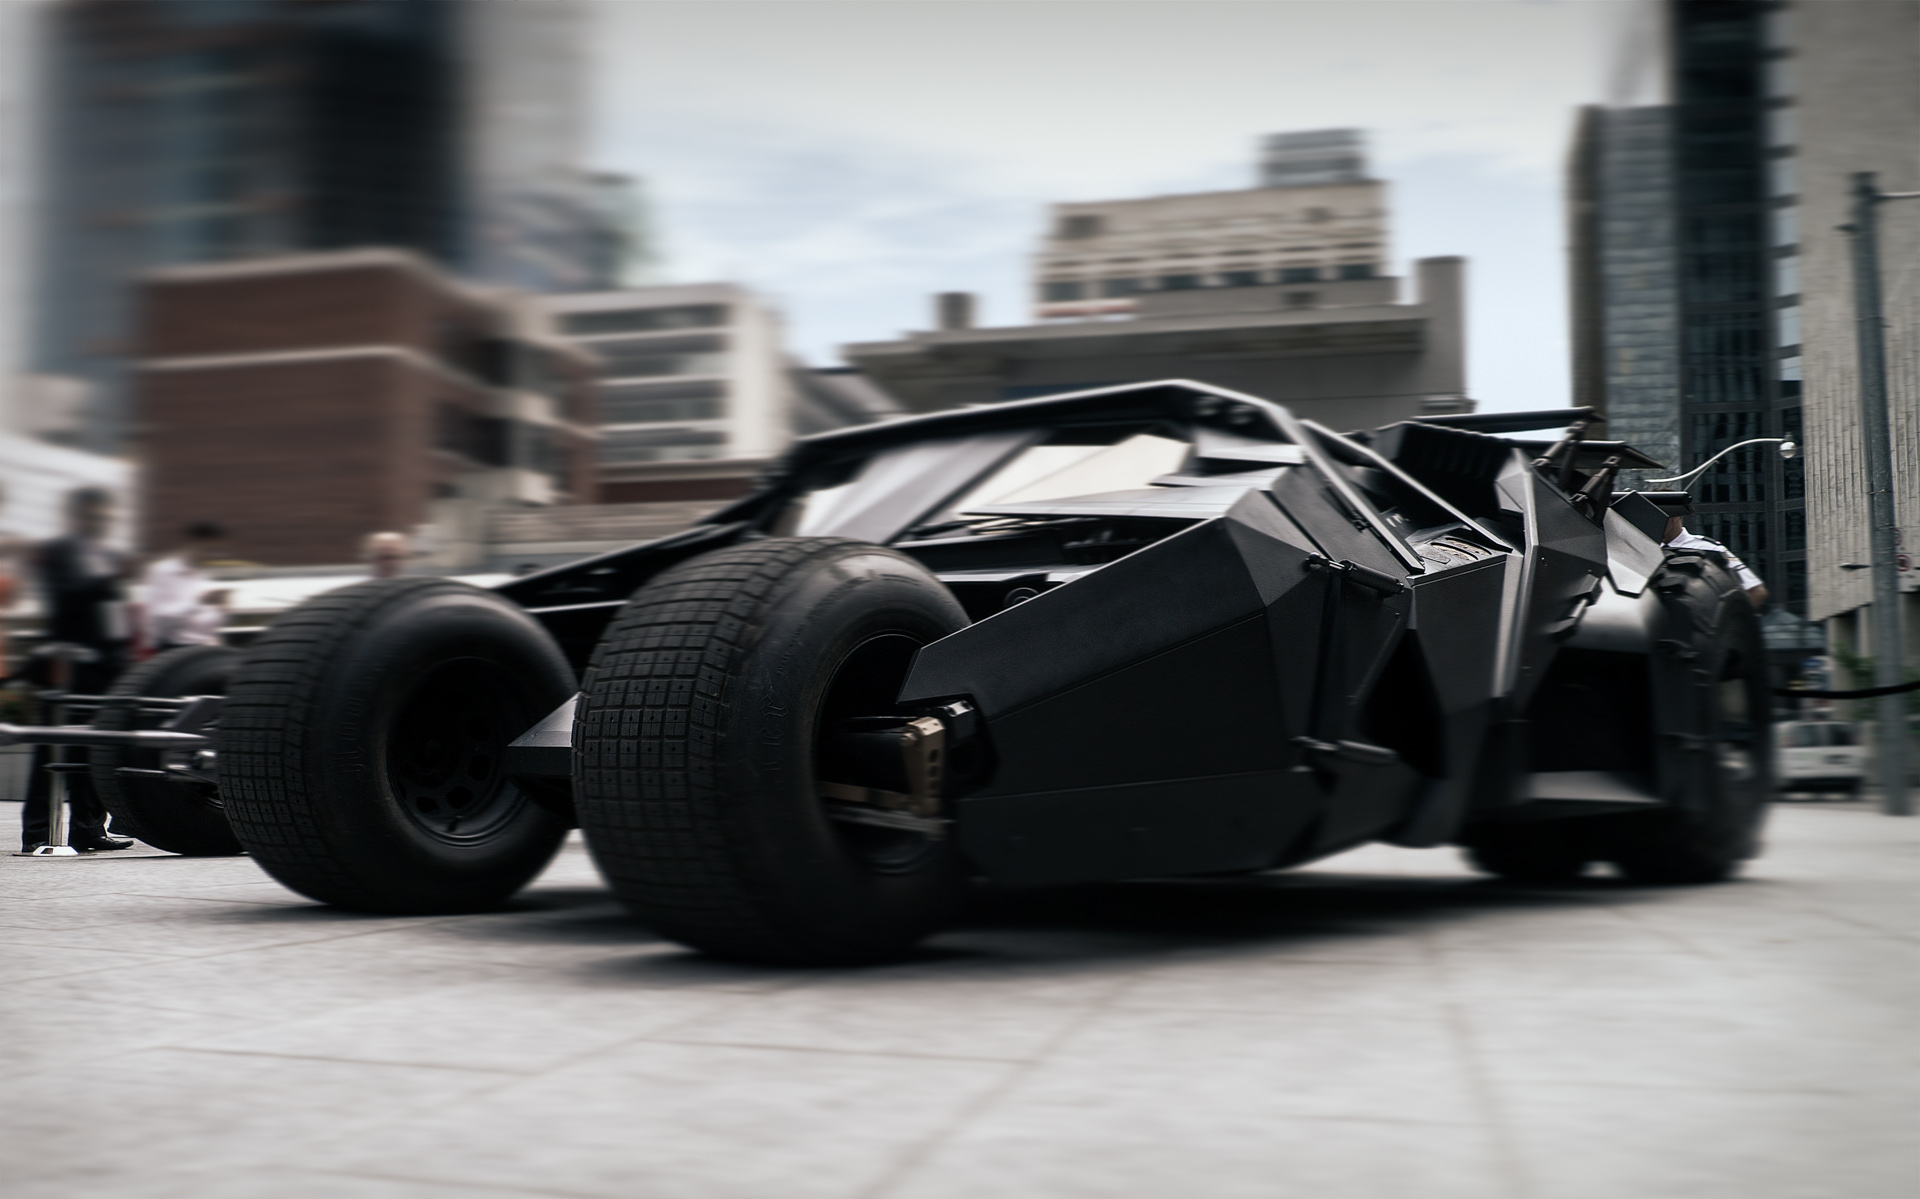 Batmobile | Flickr - Photo Sharing!